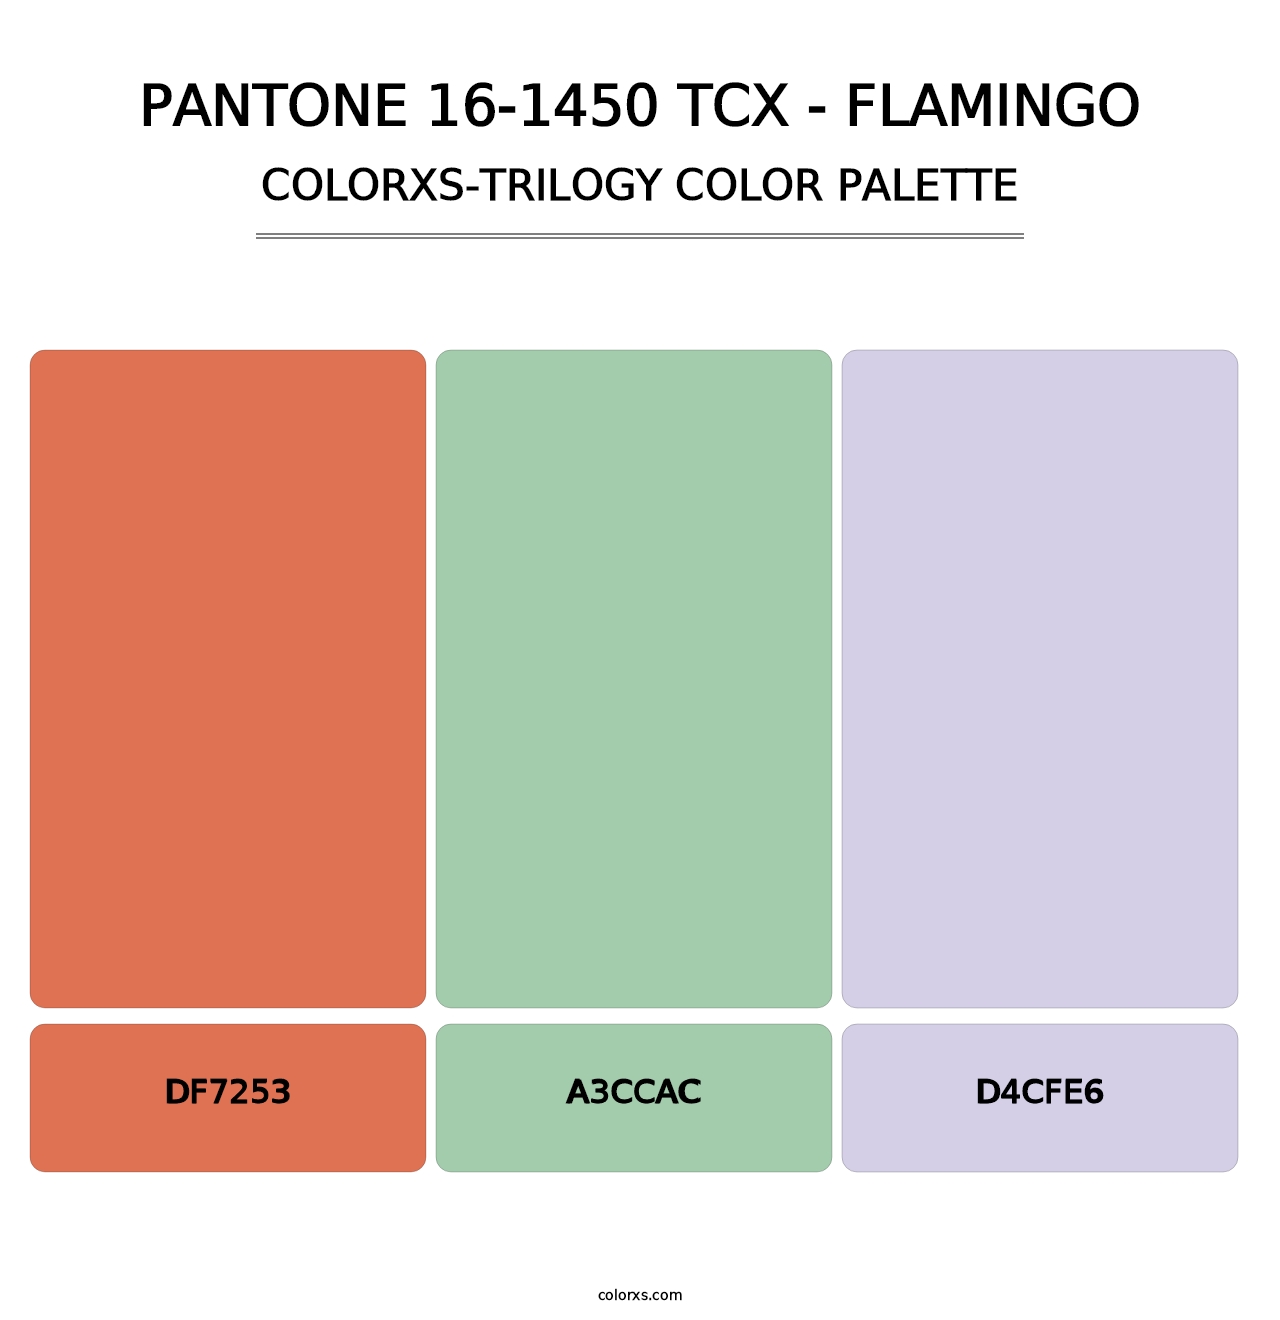 PANTONE 16-1450 TCX - Flamingo - Colorxs Trilogy Palette